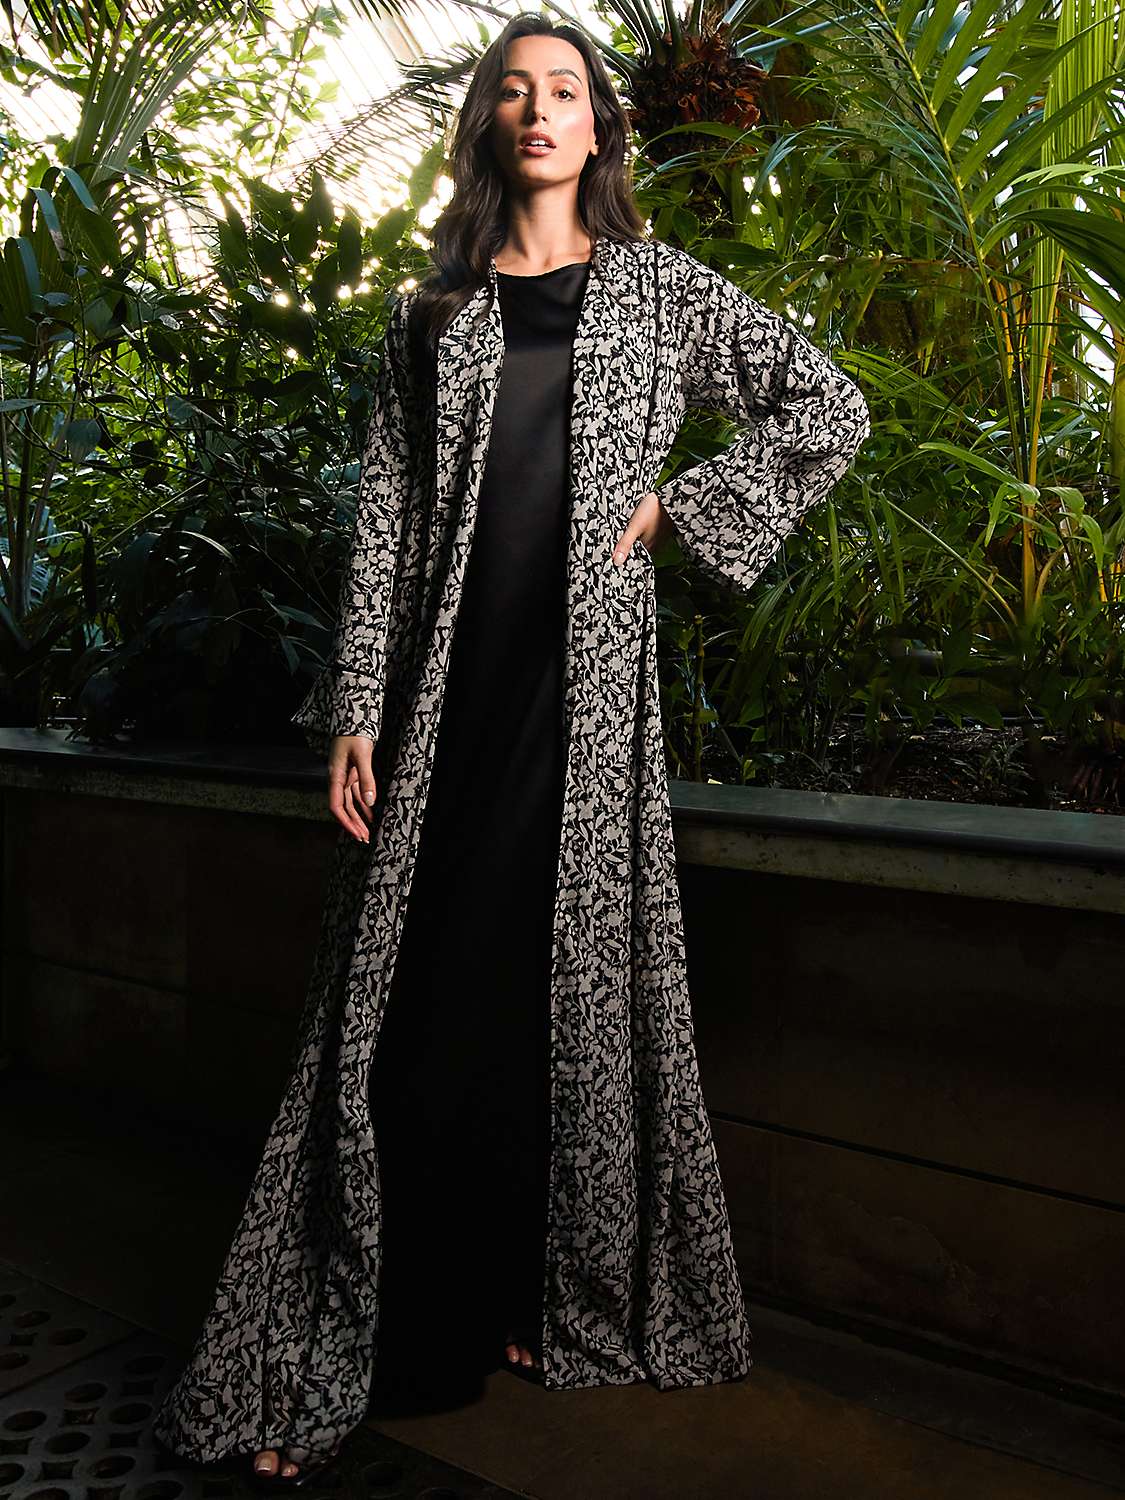 Buy Aab Crinkled Chiffon Kimono, Black/Multi Online at johnlewis.com